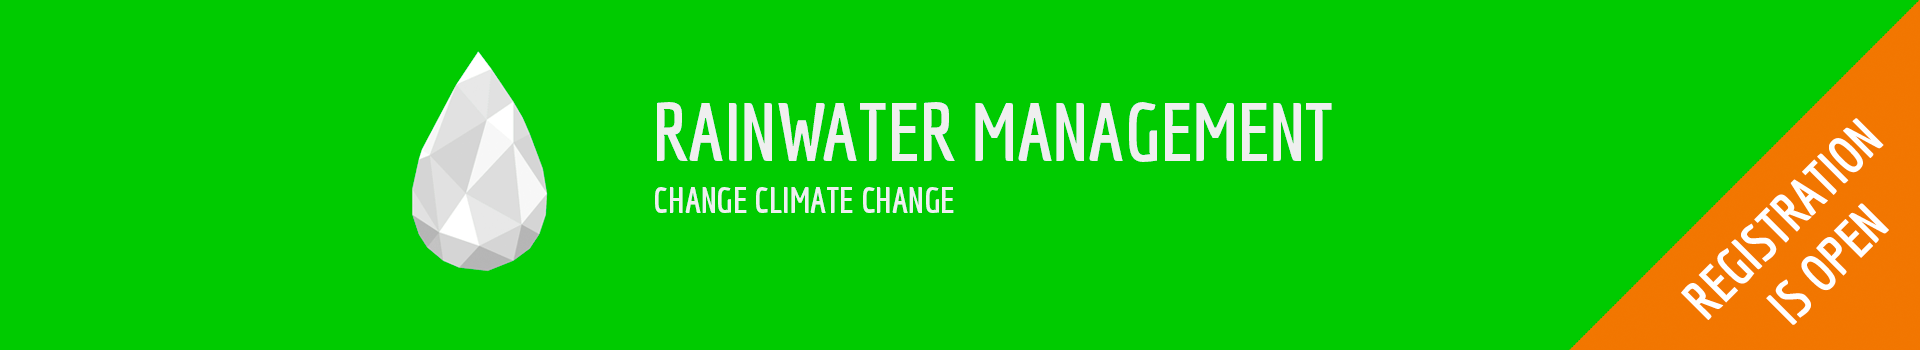 rainwater management banner registration open